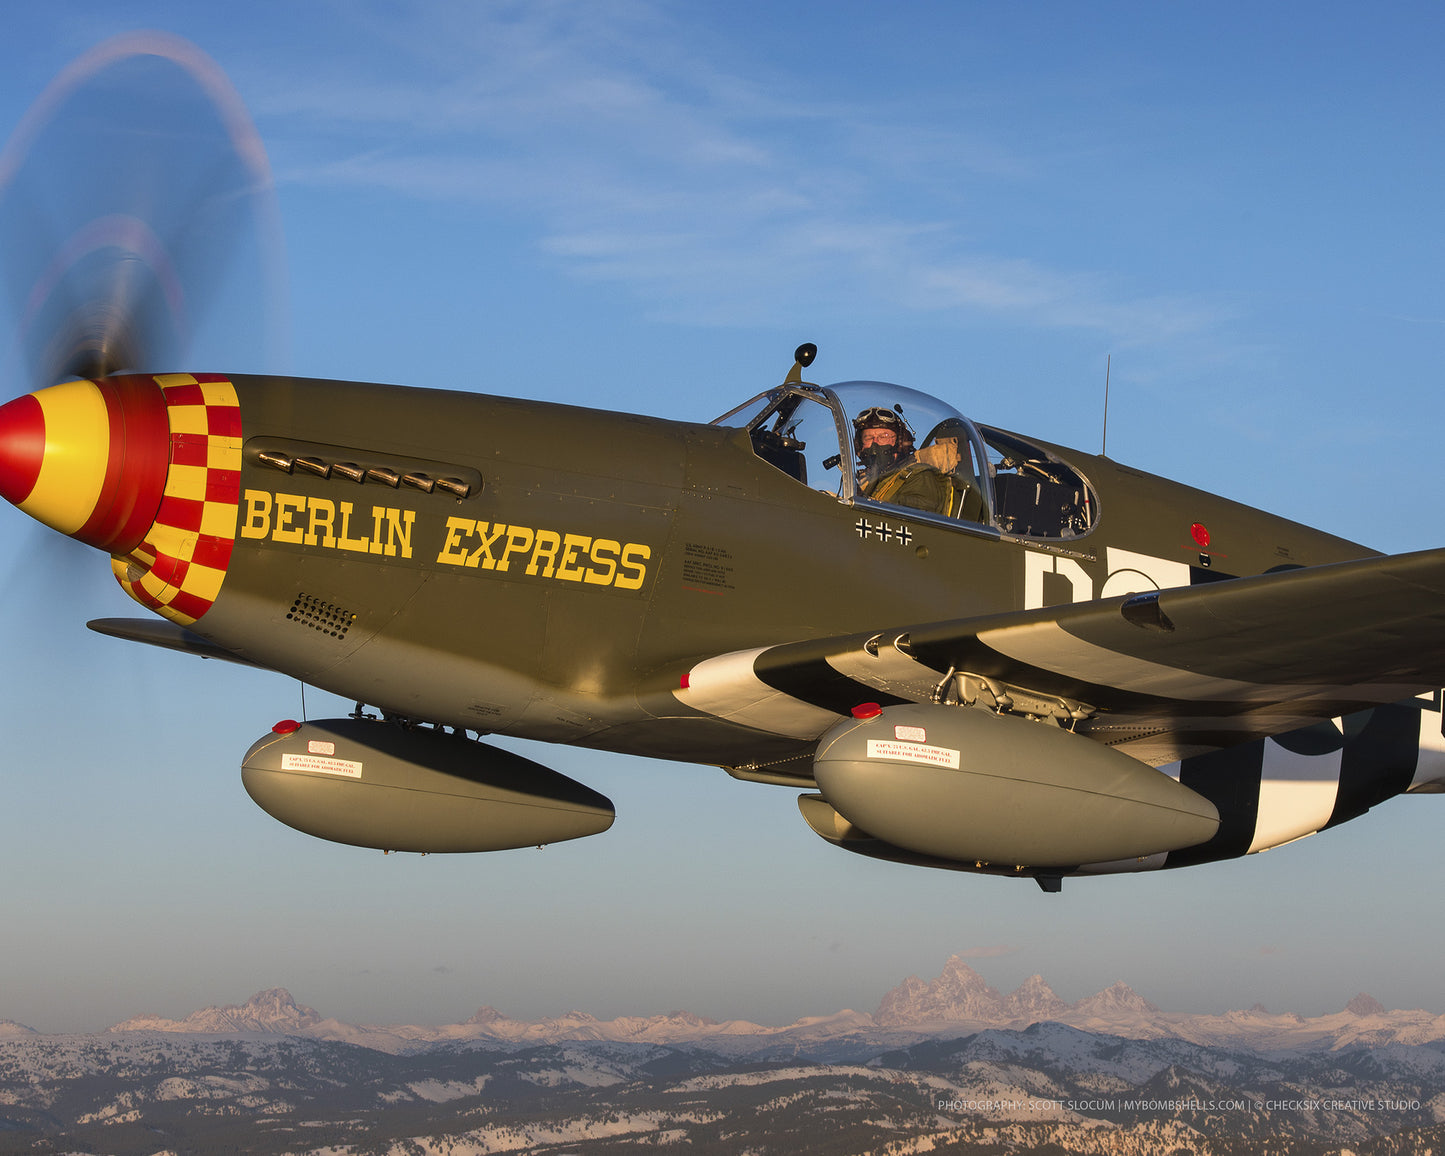 P-51 Mustang 'Berlin Express'